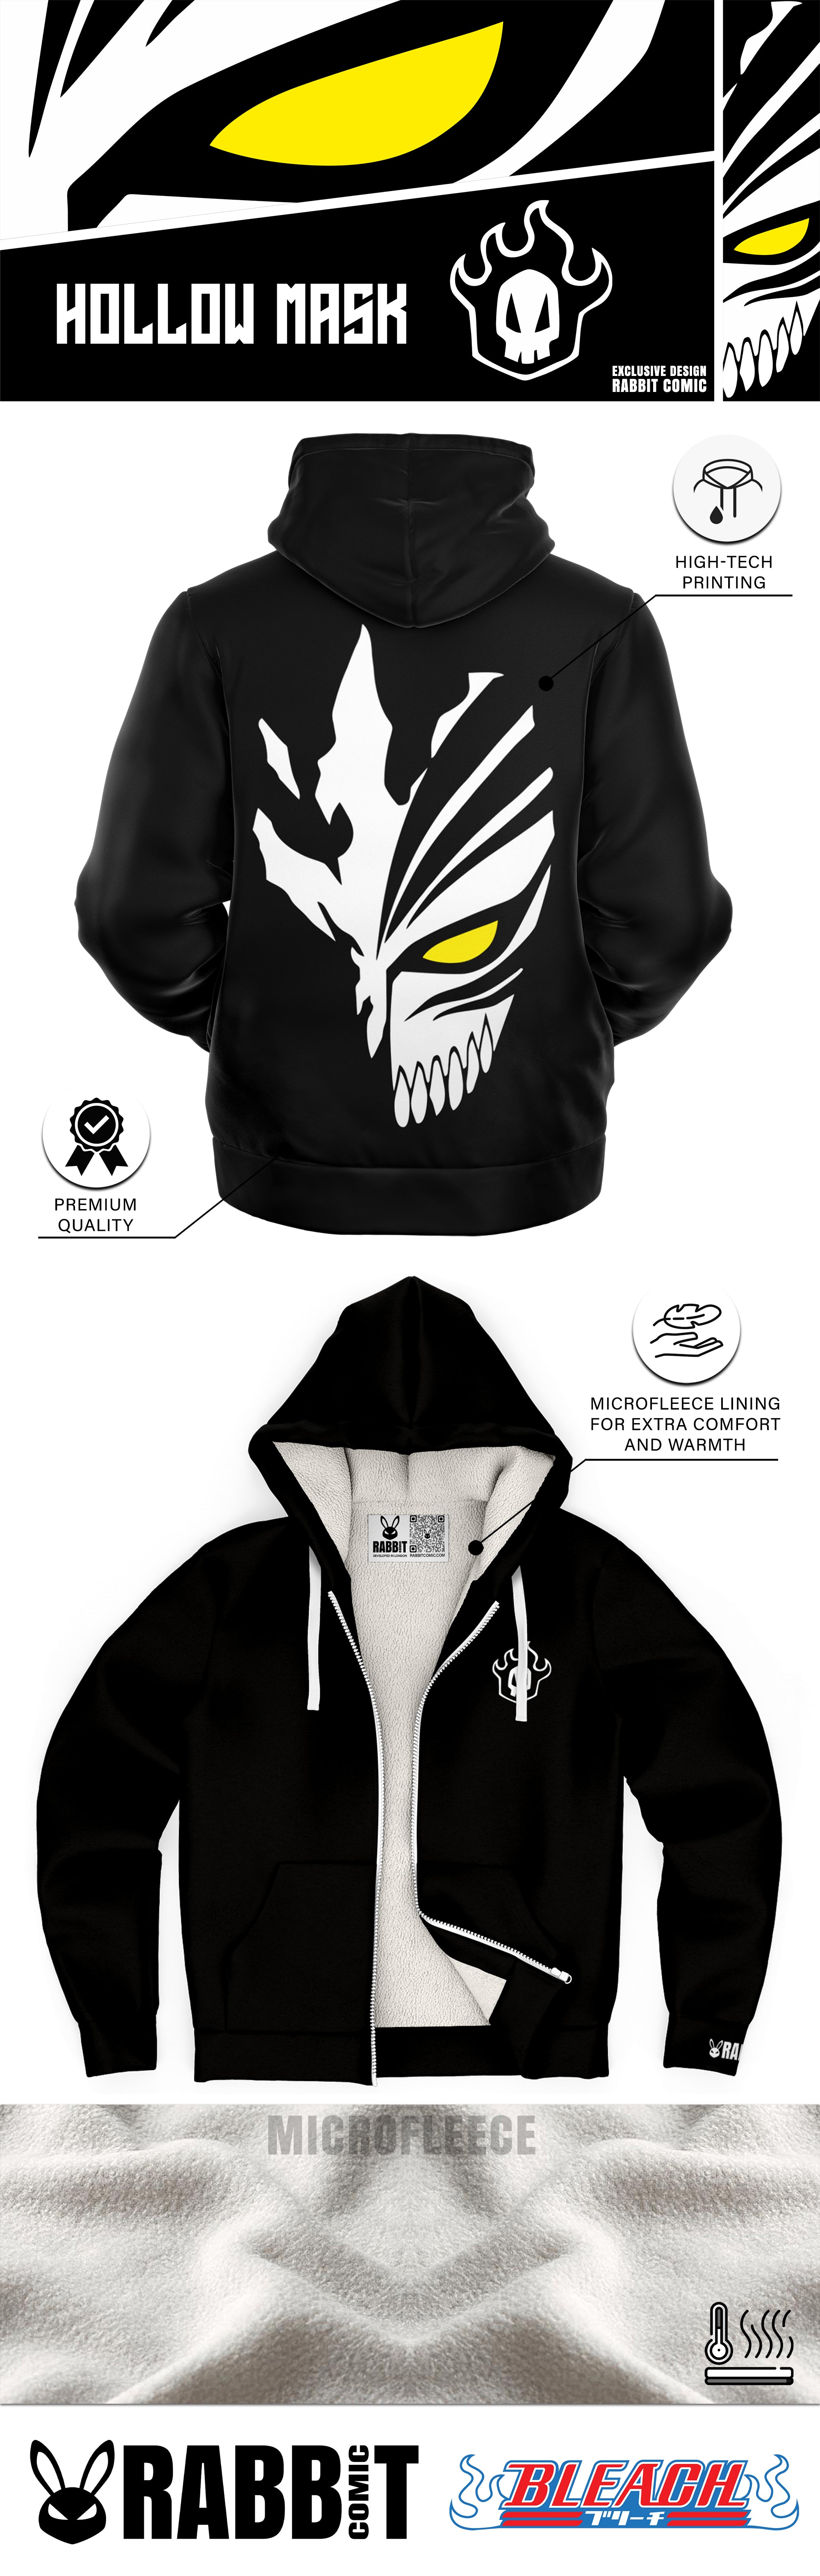 ipzHeJ 2022 Bleach Anime Hoodie Kurosaki Ichigo Printed Hoodie Sweatshirts  Men and Women Casual Sport Pullover Zipper hooded size XXS to 4XL   Walmartcom